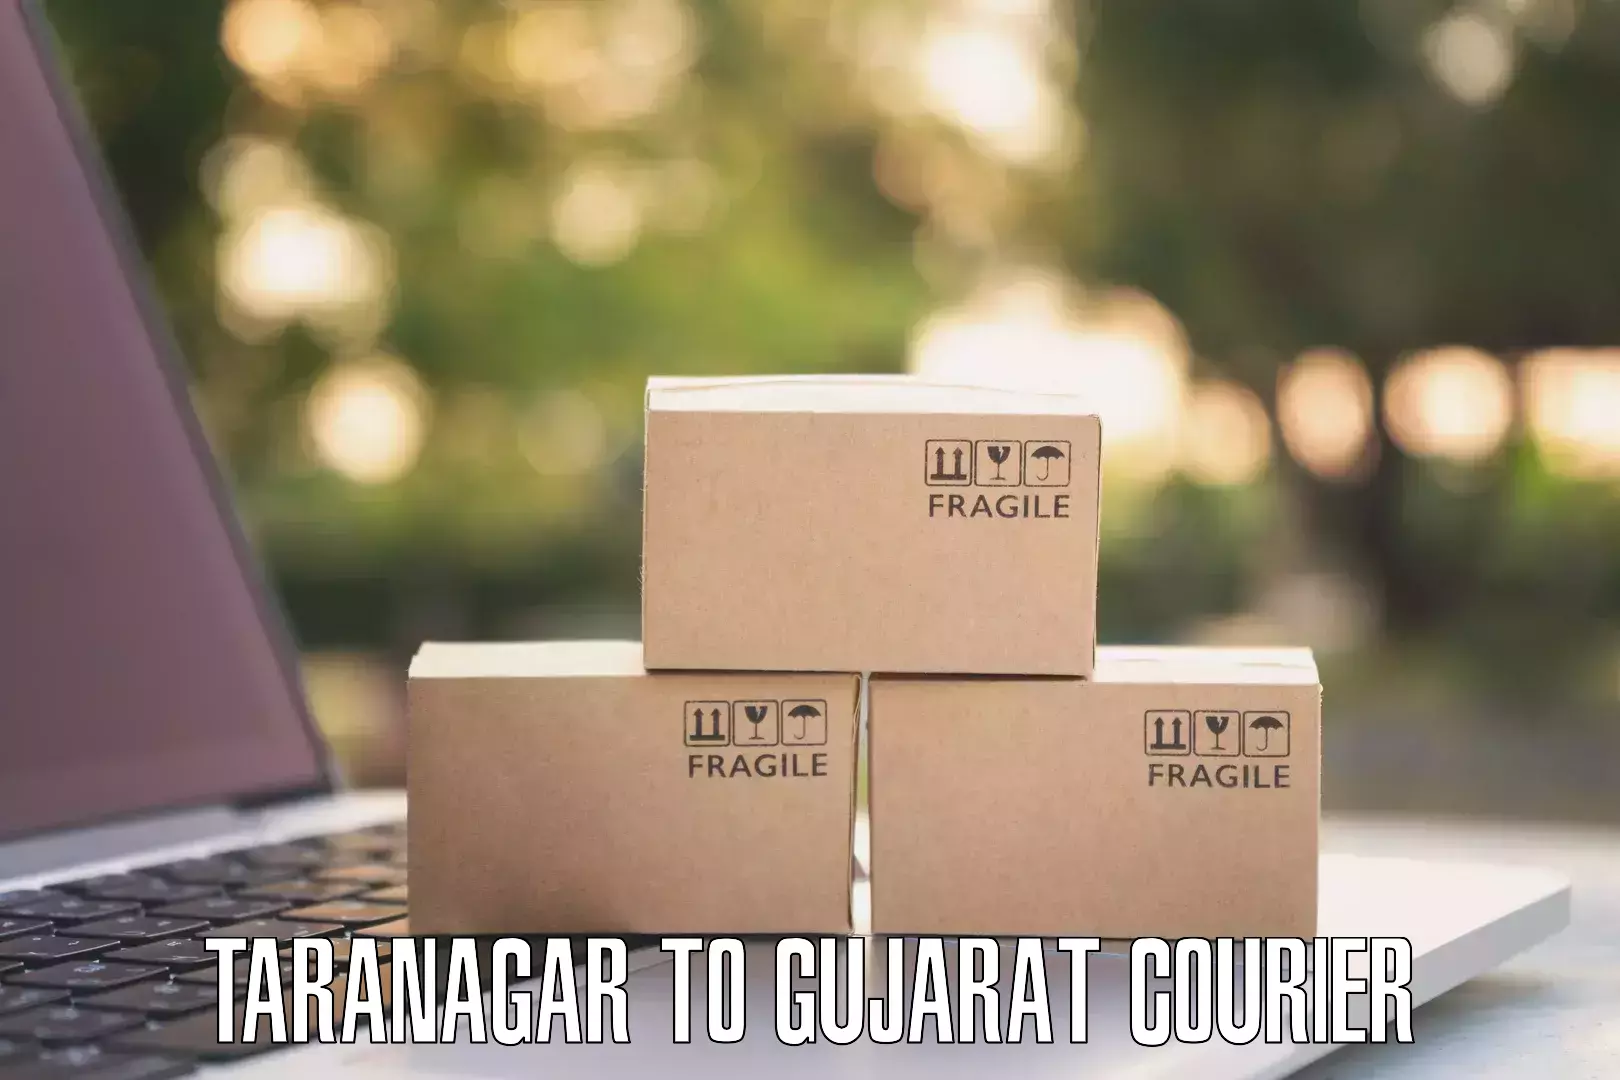 State-of-the-art courier technology Taranagar to Gandhinagar